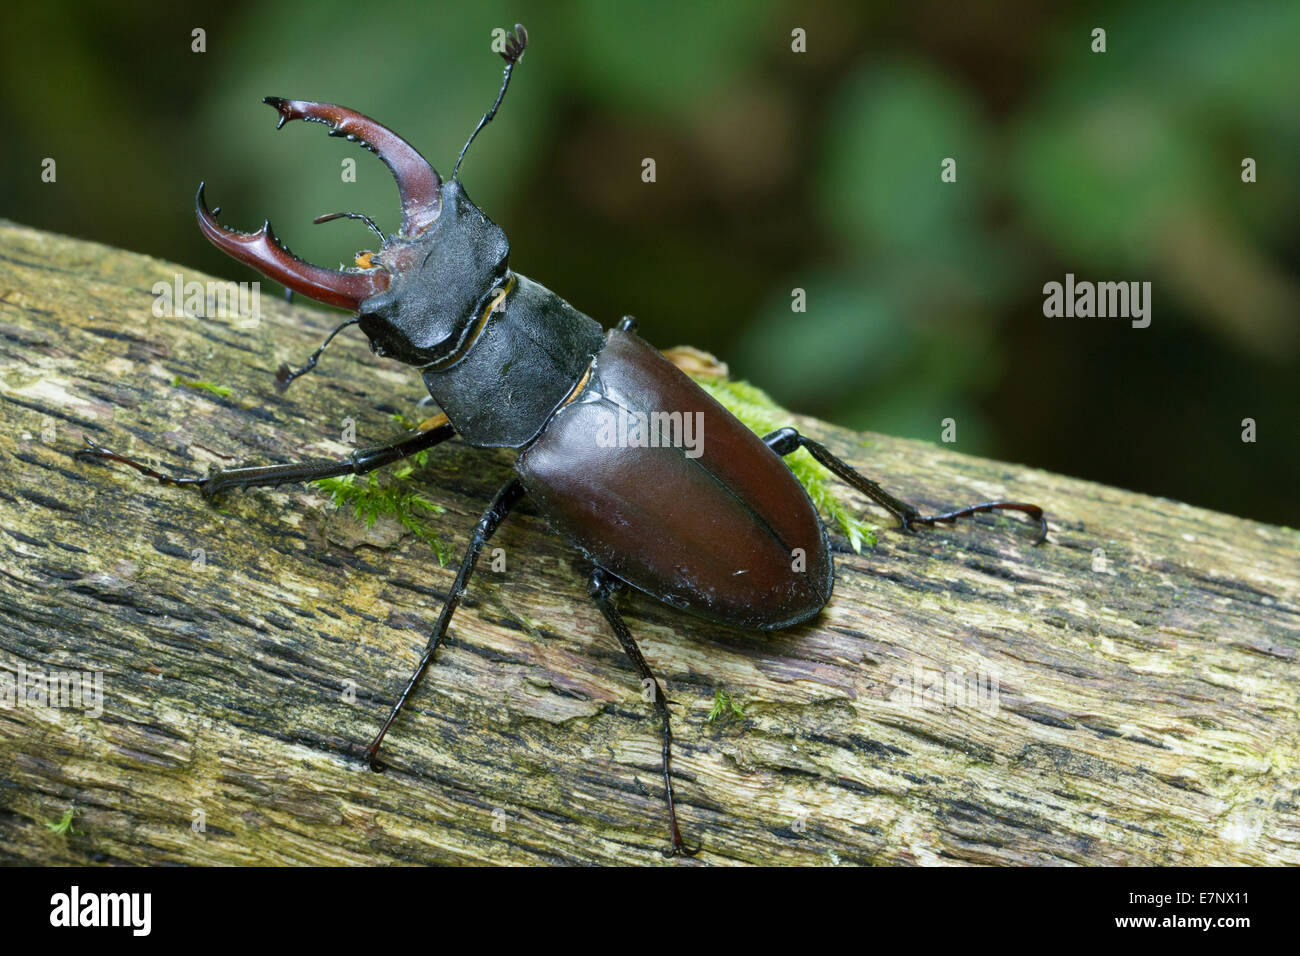 Animal, insecte, Coleoptera, Lucanus cervus, Arthropoda, coléoptère, Stag Beetle, forêt, bois mort, Suisse Banque D'Images